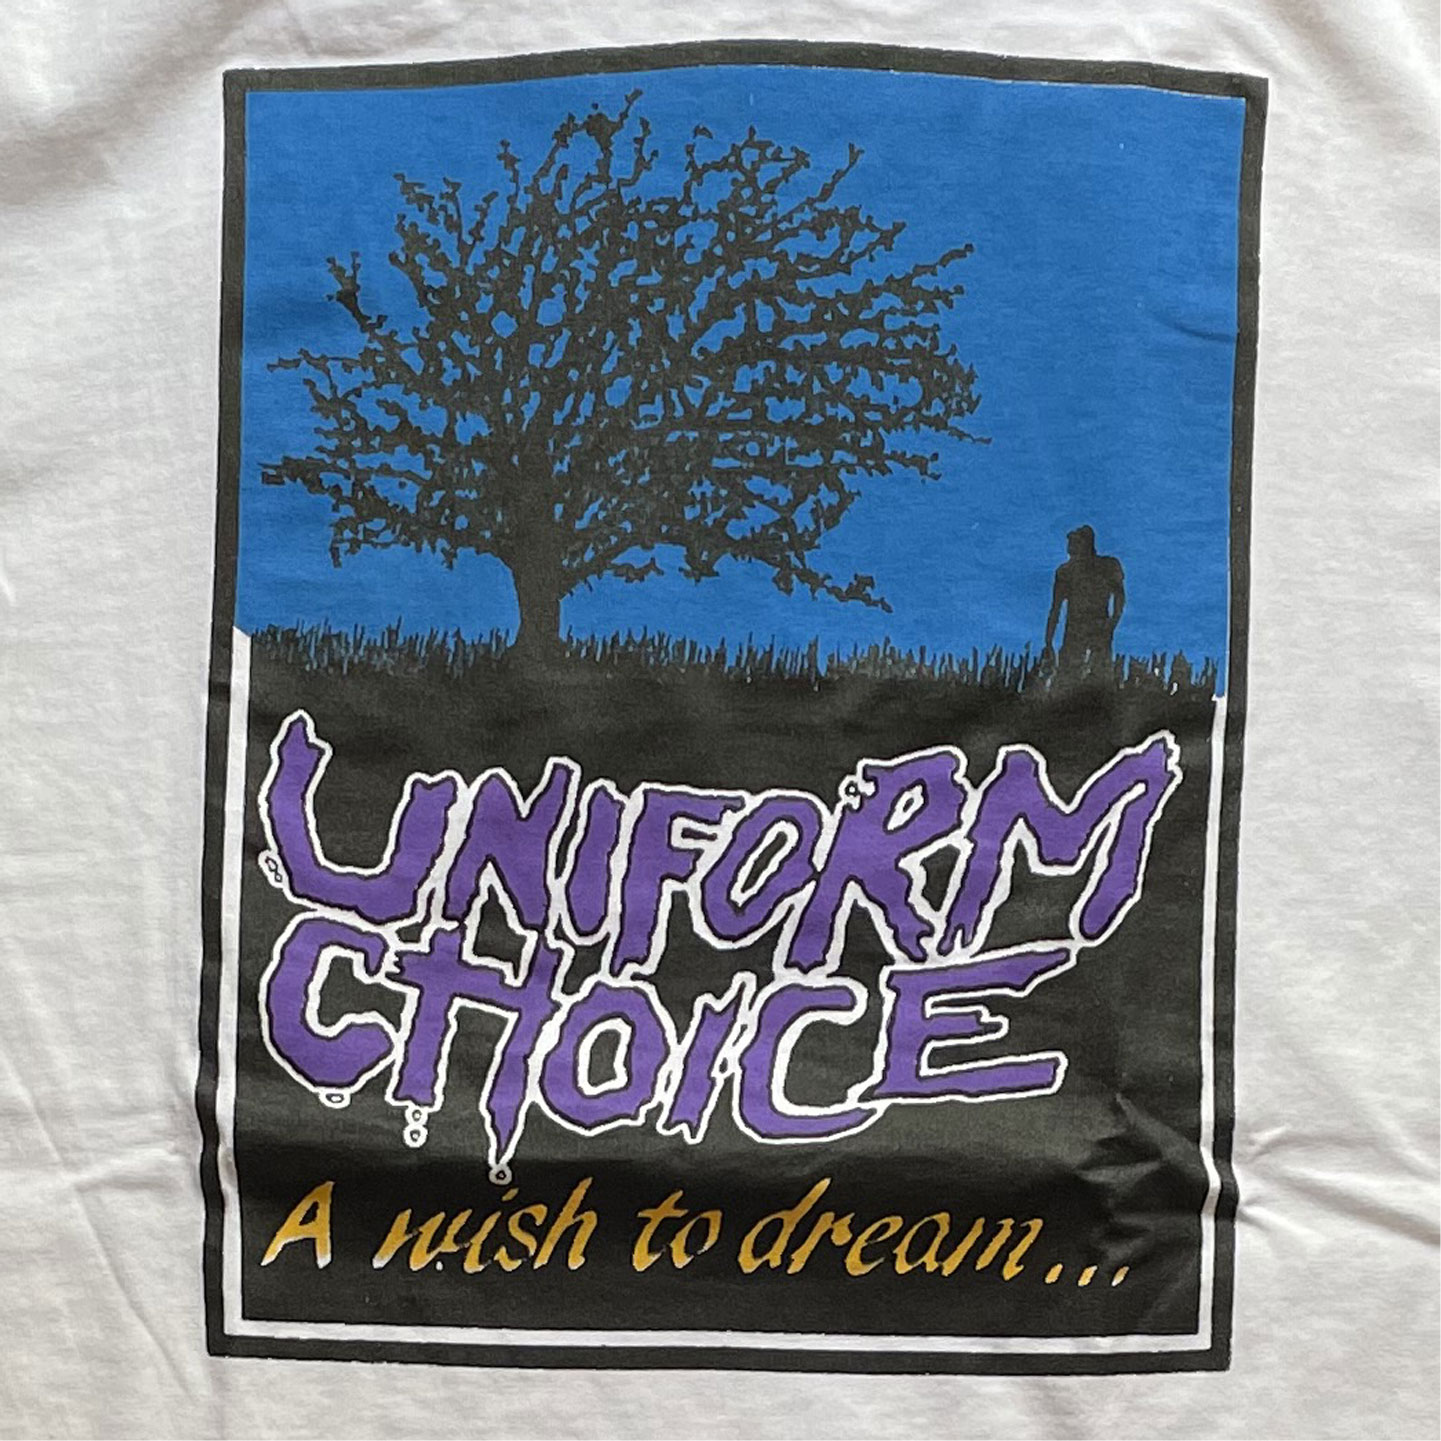 UNIFORM CHOICE Tシャツ A wish to dream...3